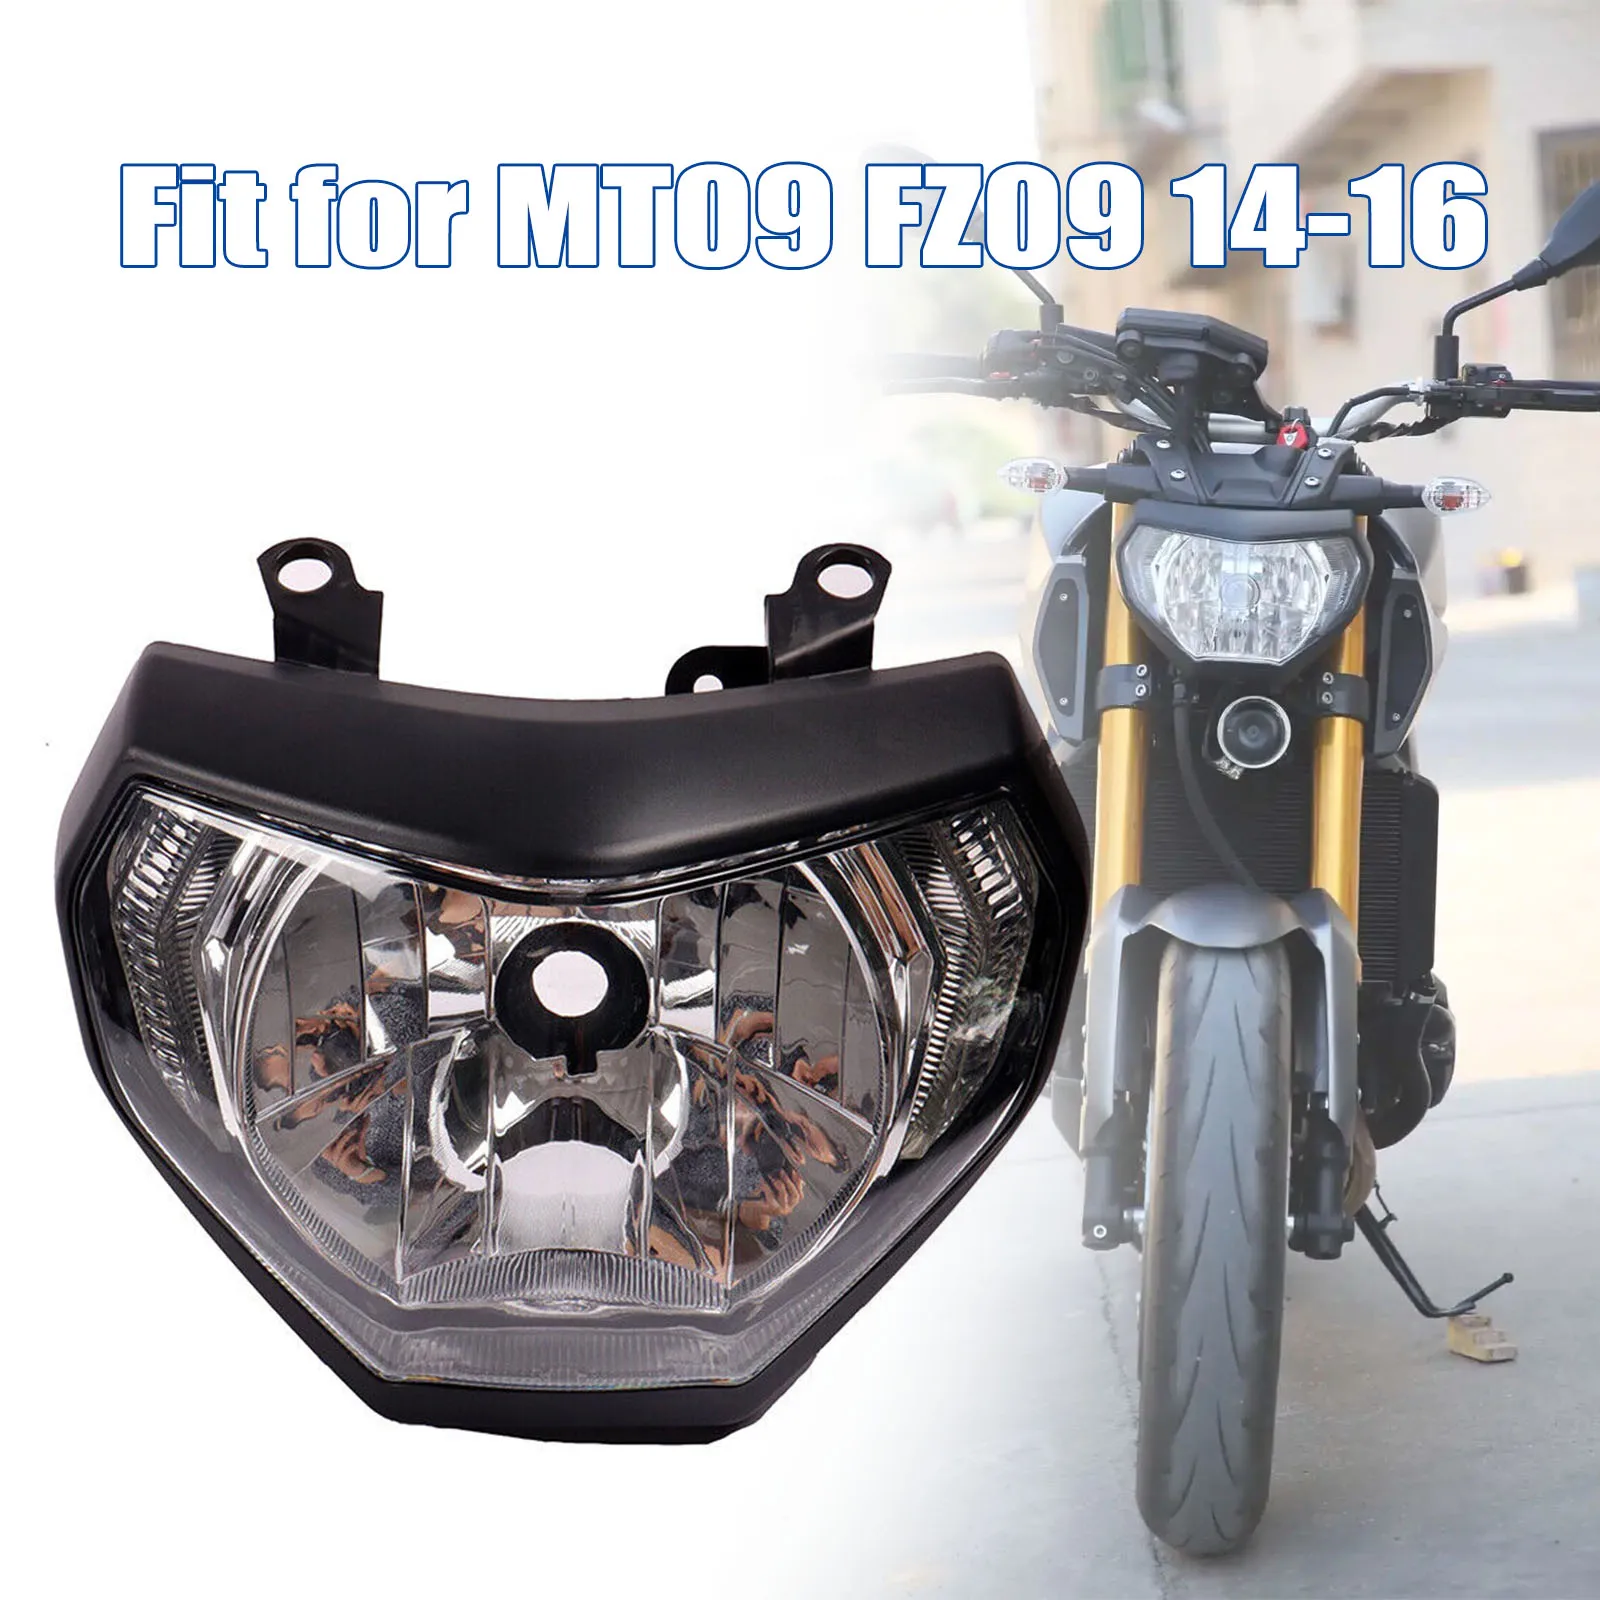 

Fit For 2014 - 2016 Yamaha MT09 FZ-09 MT-09 Motorcycle Headlight Assembly Headlamp MT 09 FZ09 2015 Head Light Accessories